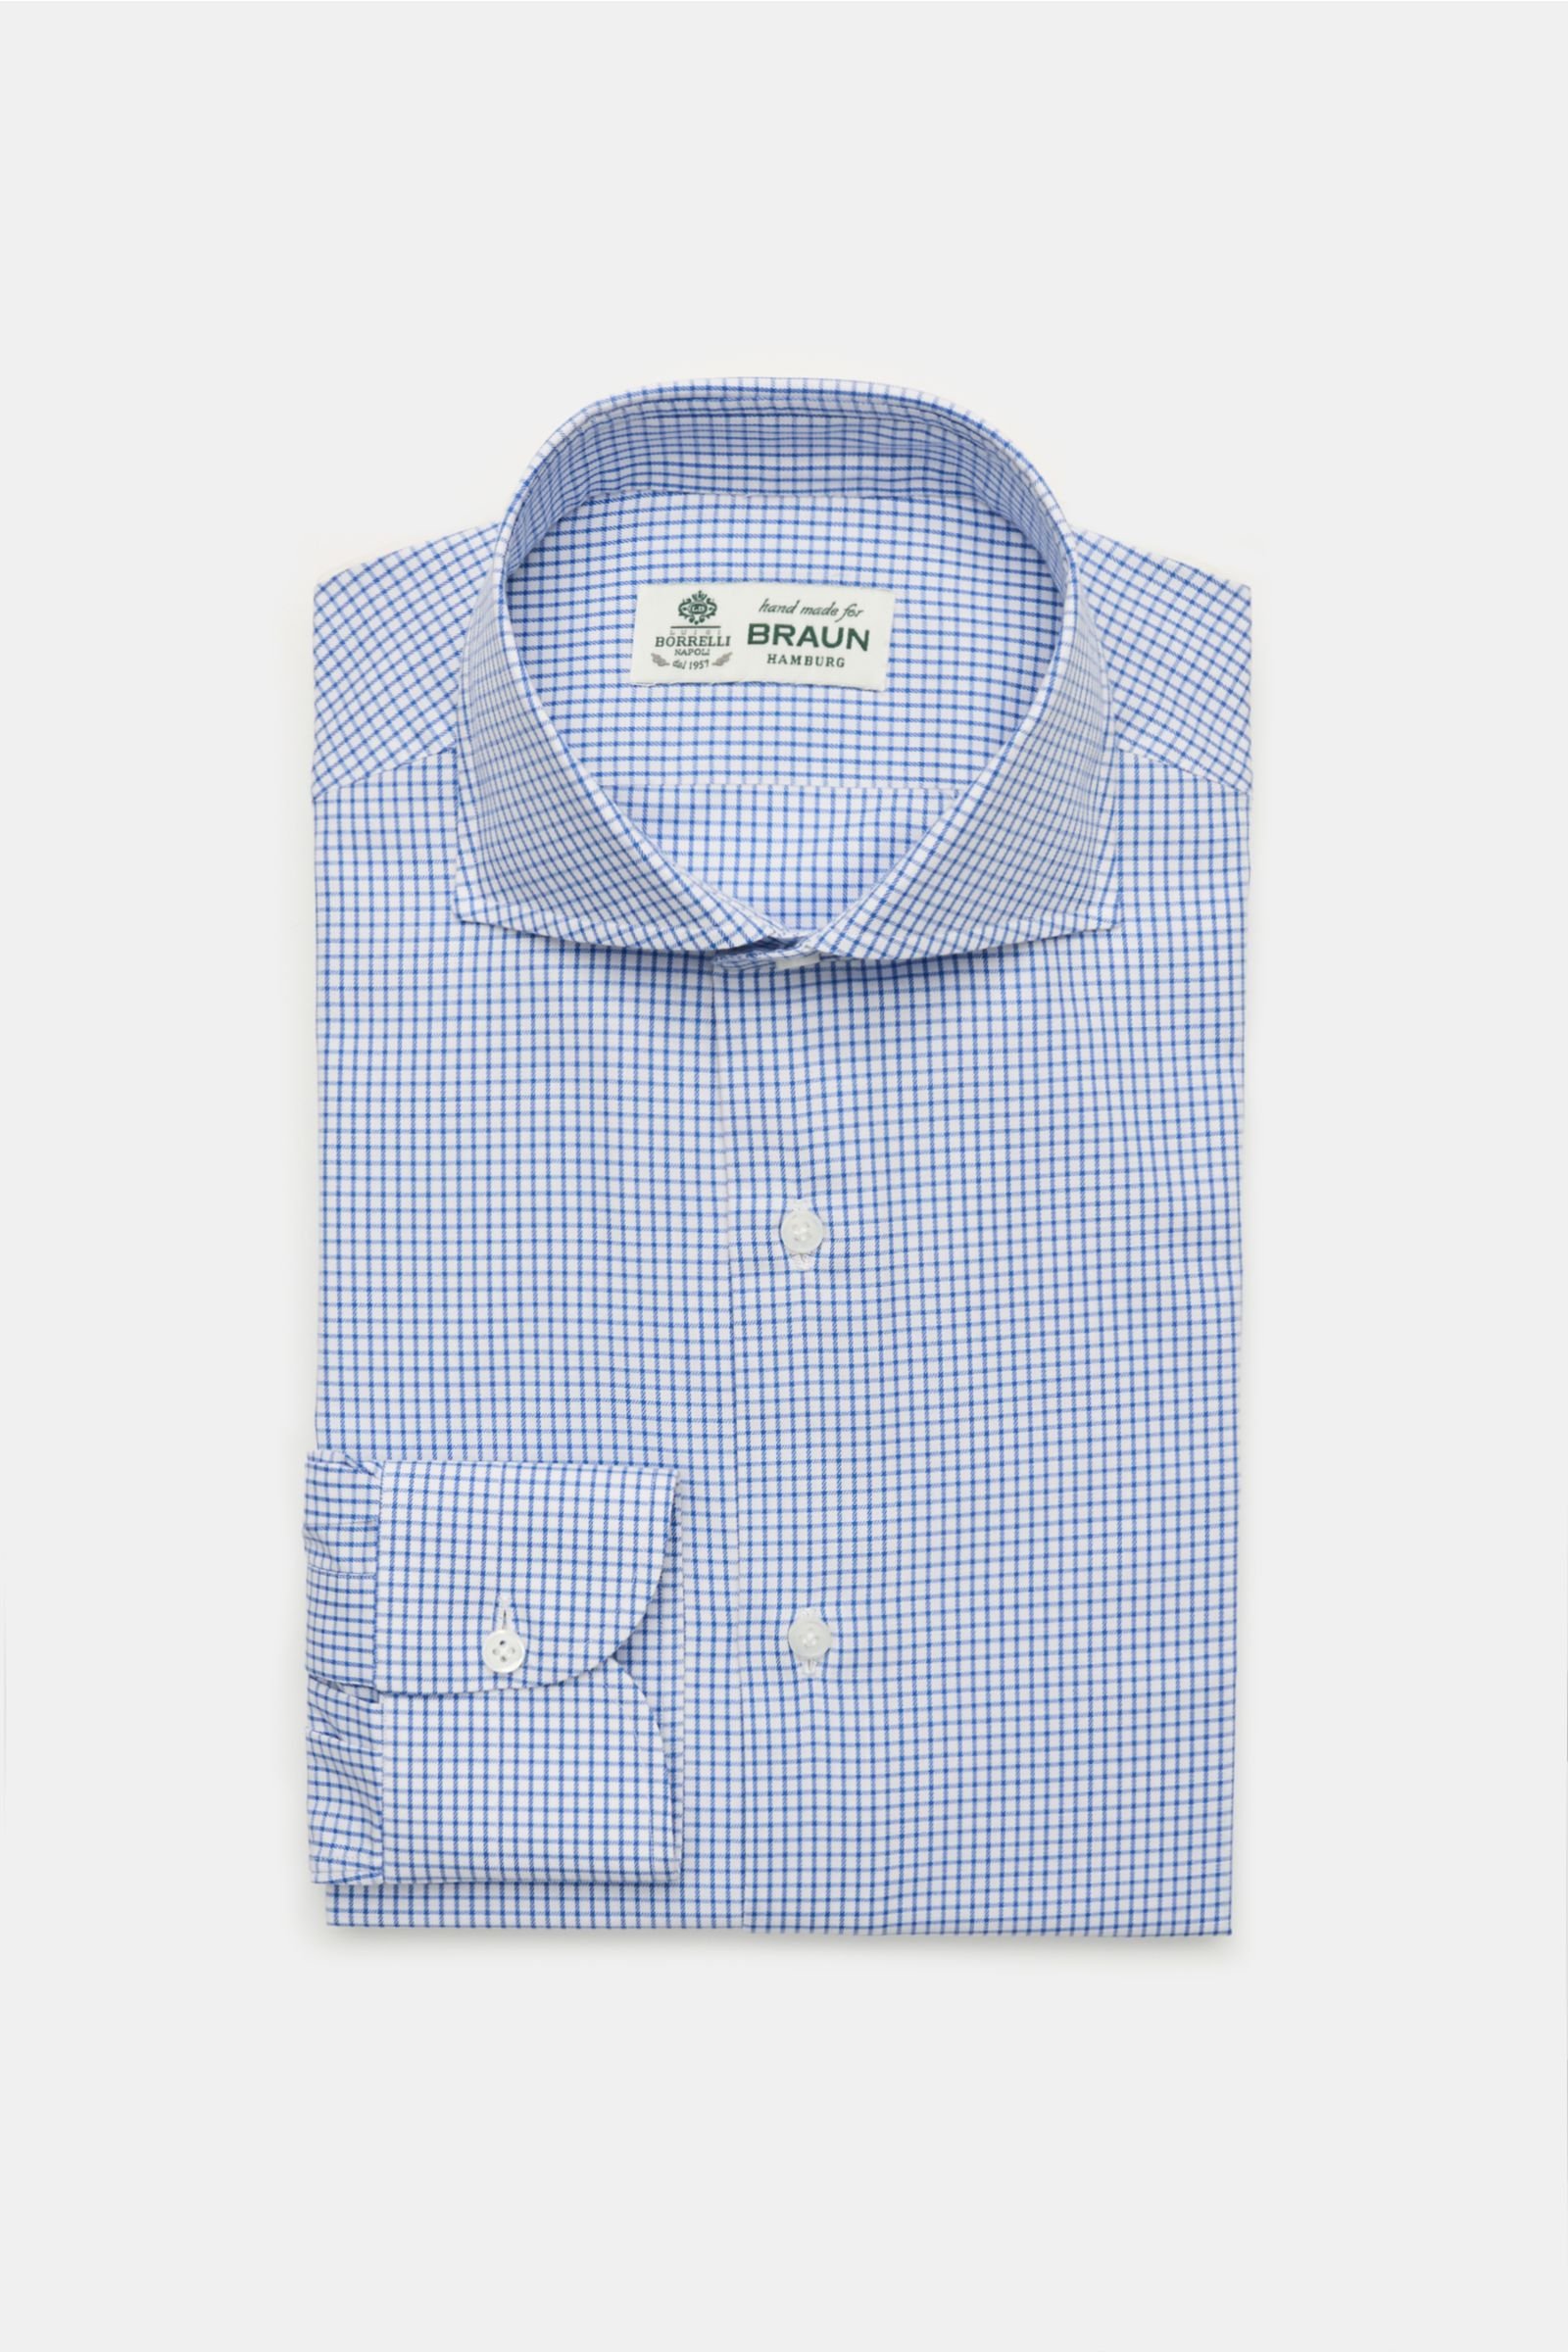 Business shirt 'Nando' shark collar dark blue/white checked